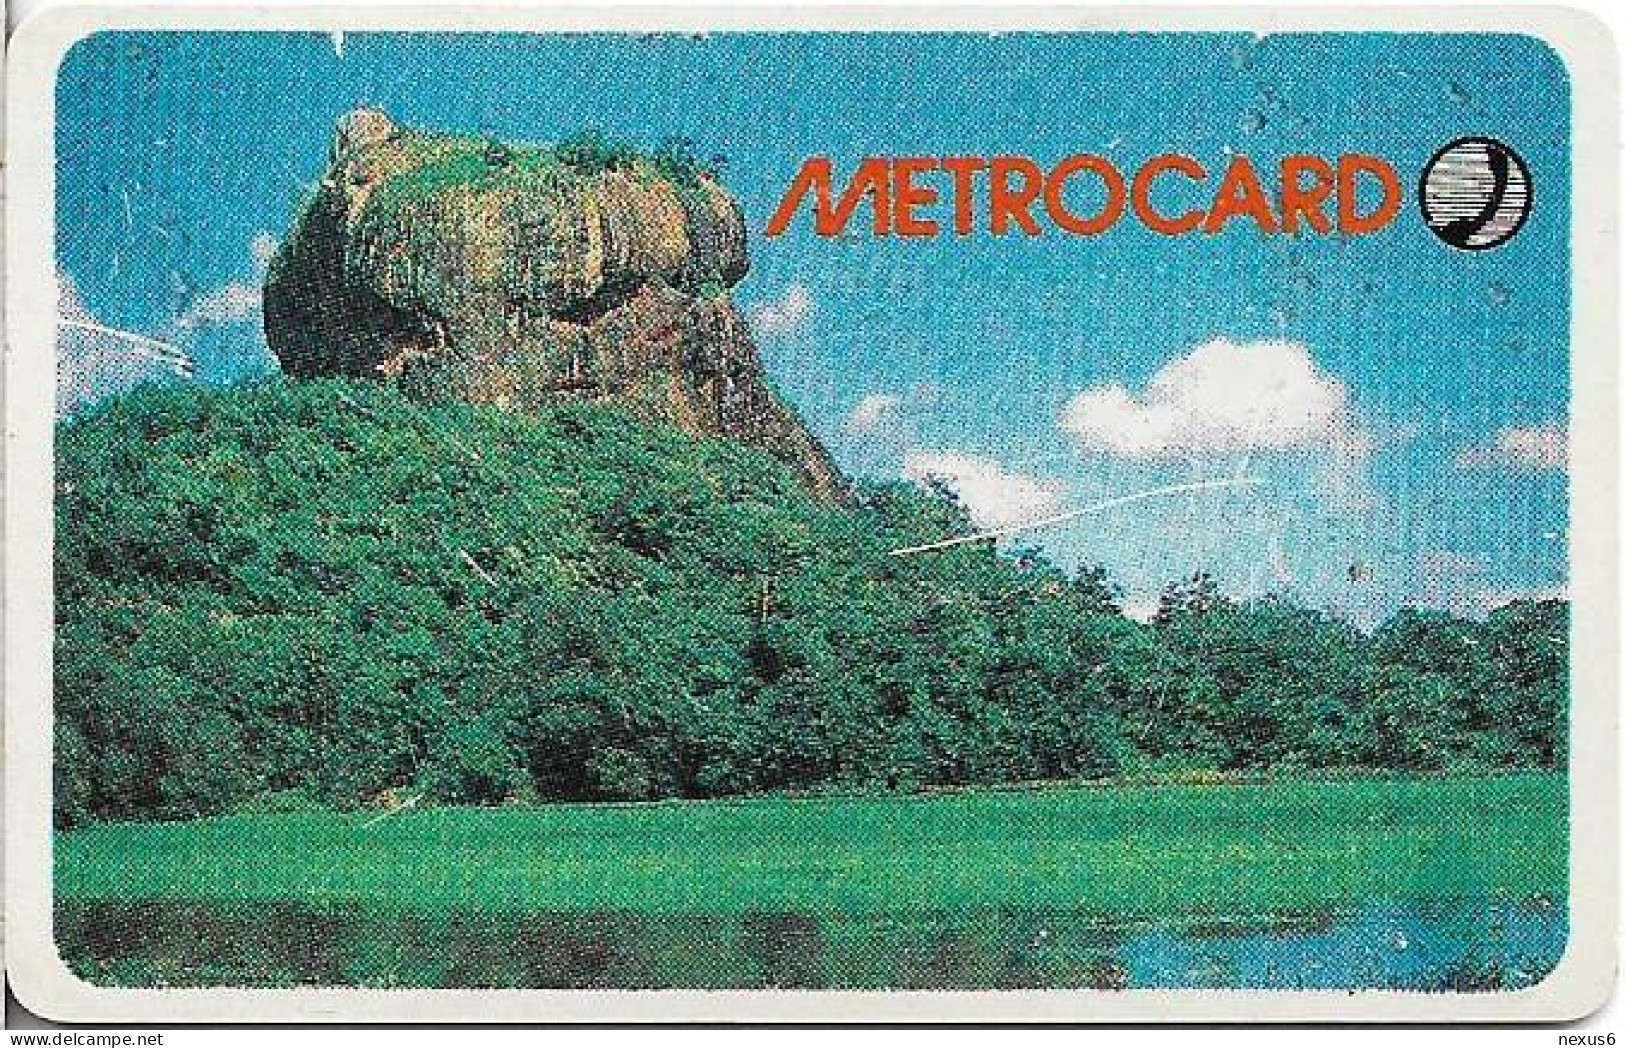 Sri Lanka - Metrocard (Chip) - Sigiriya Rock (With Moreno Logo), SC7, 150Rs, Used - Sri Lanka (Ceylon)